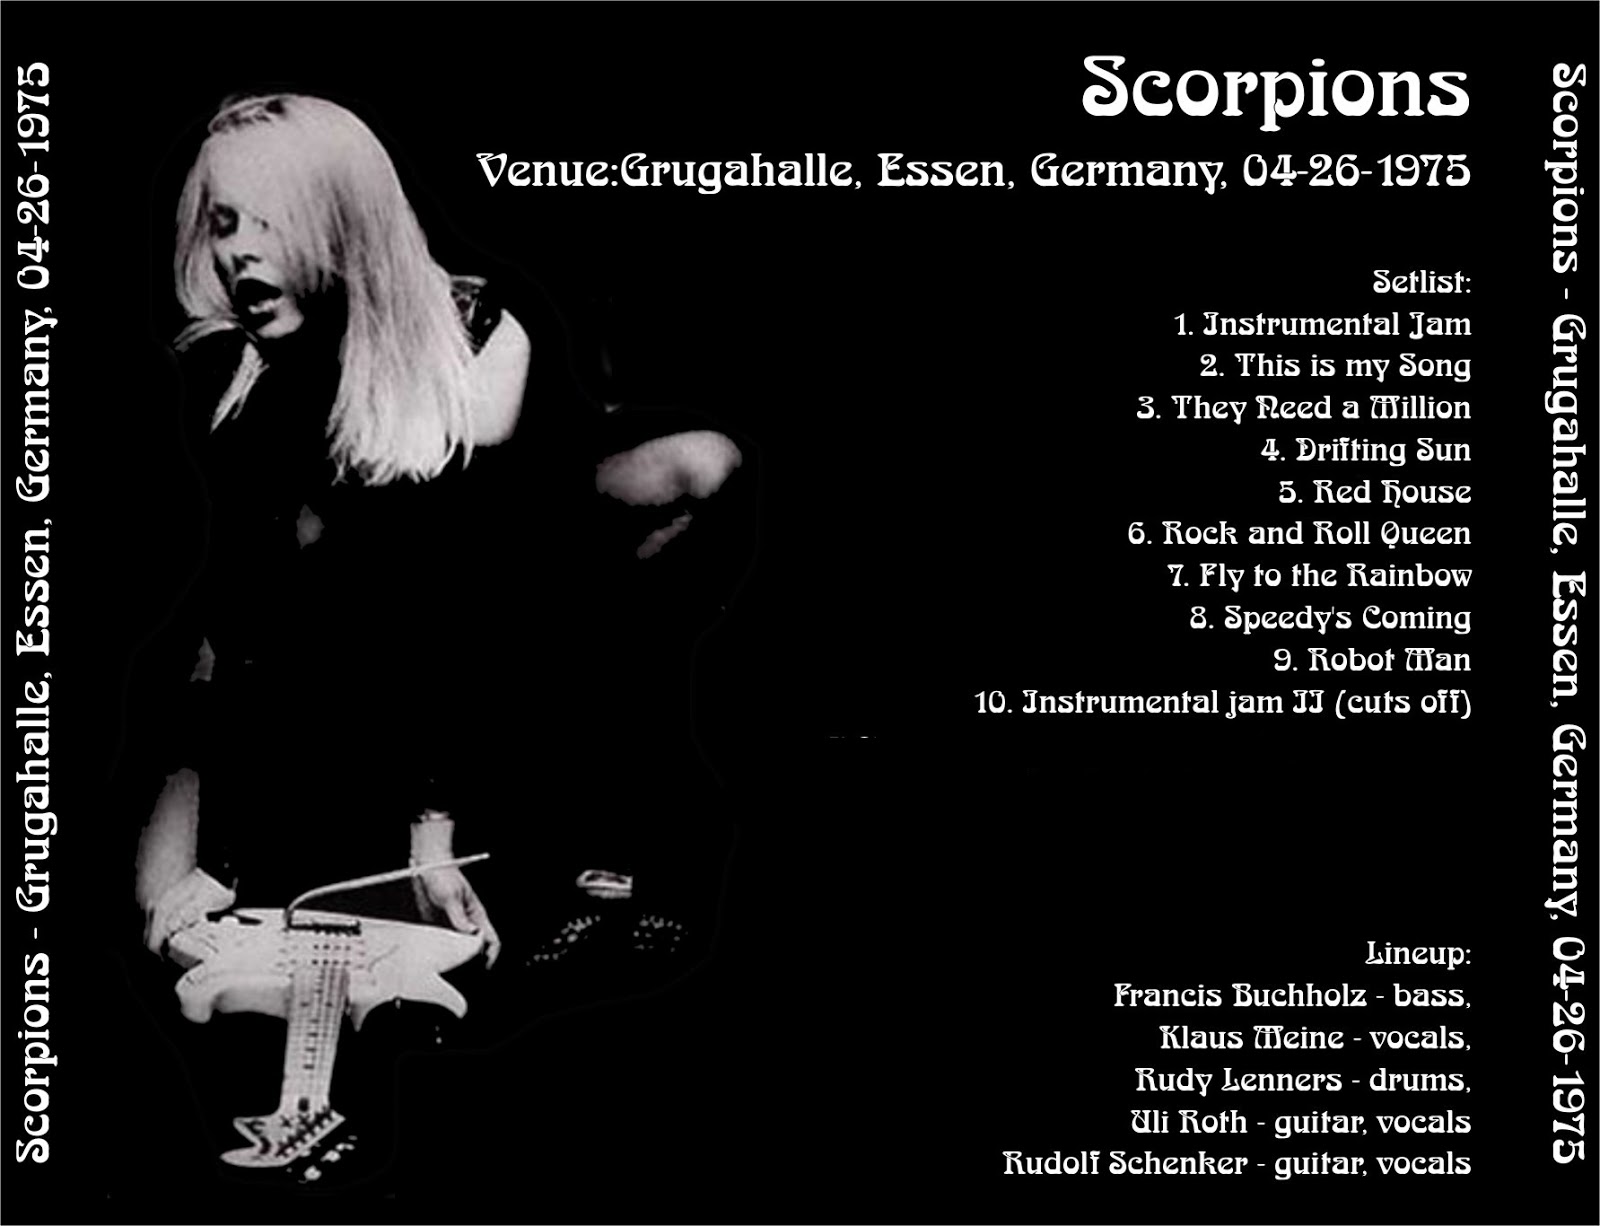 Scorpions flac. Scorpions in Trance 1975. Scorpions 1975 обложка. Scorpions in Trance 1975 LP. Scorpions in Trance обложка альбома.